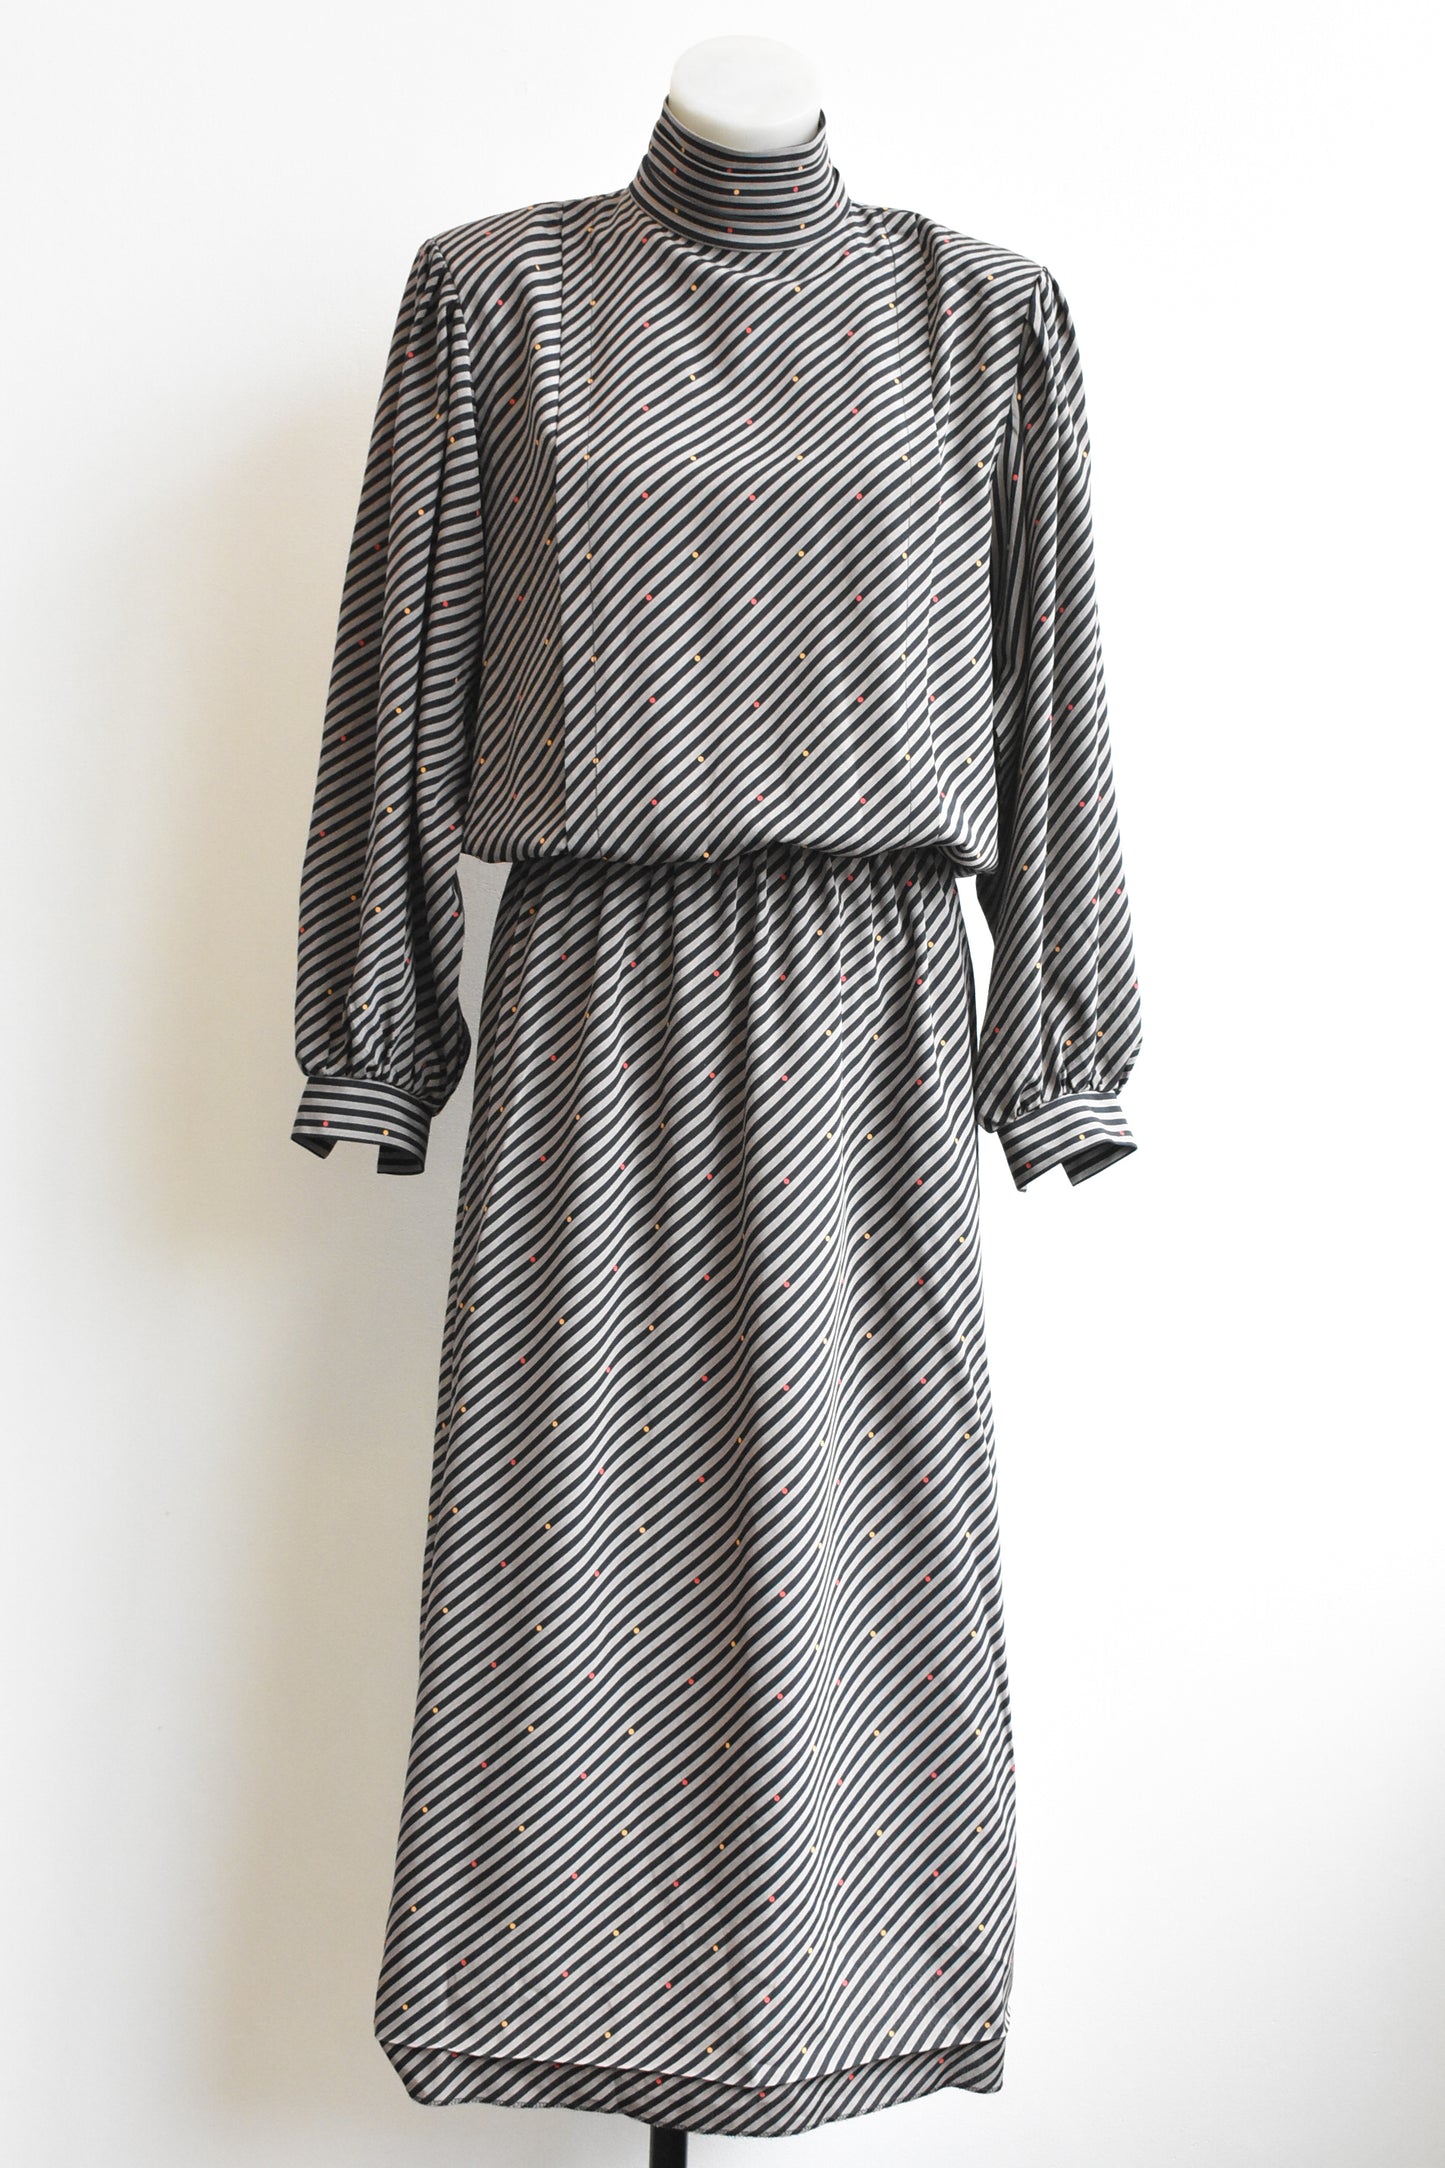 Rapport shoulder pad retro polka dot dress, size S-M